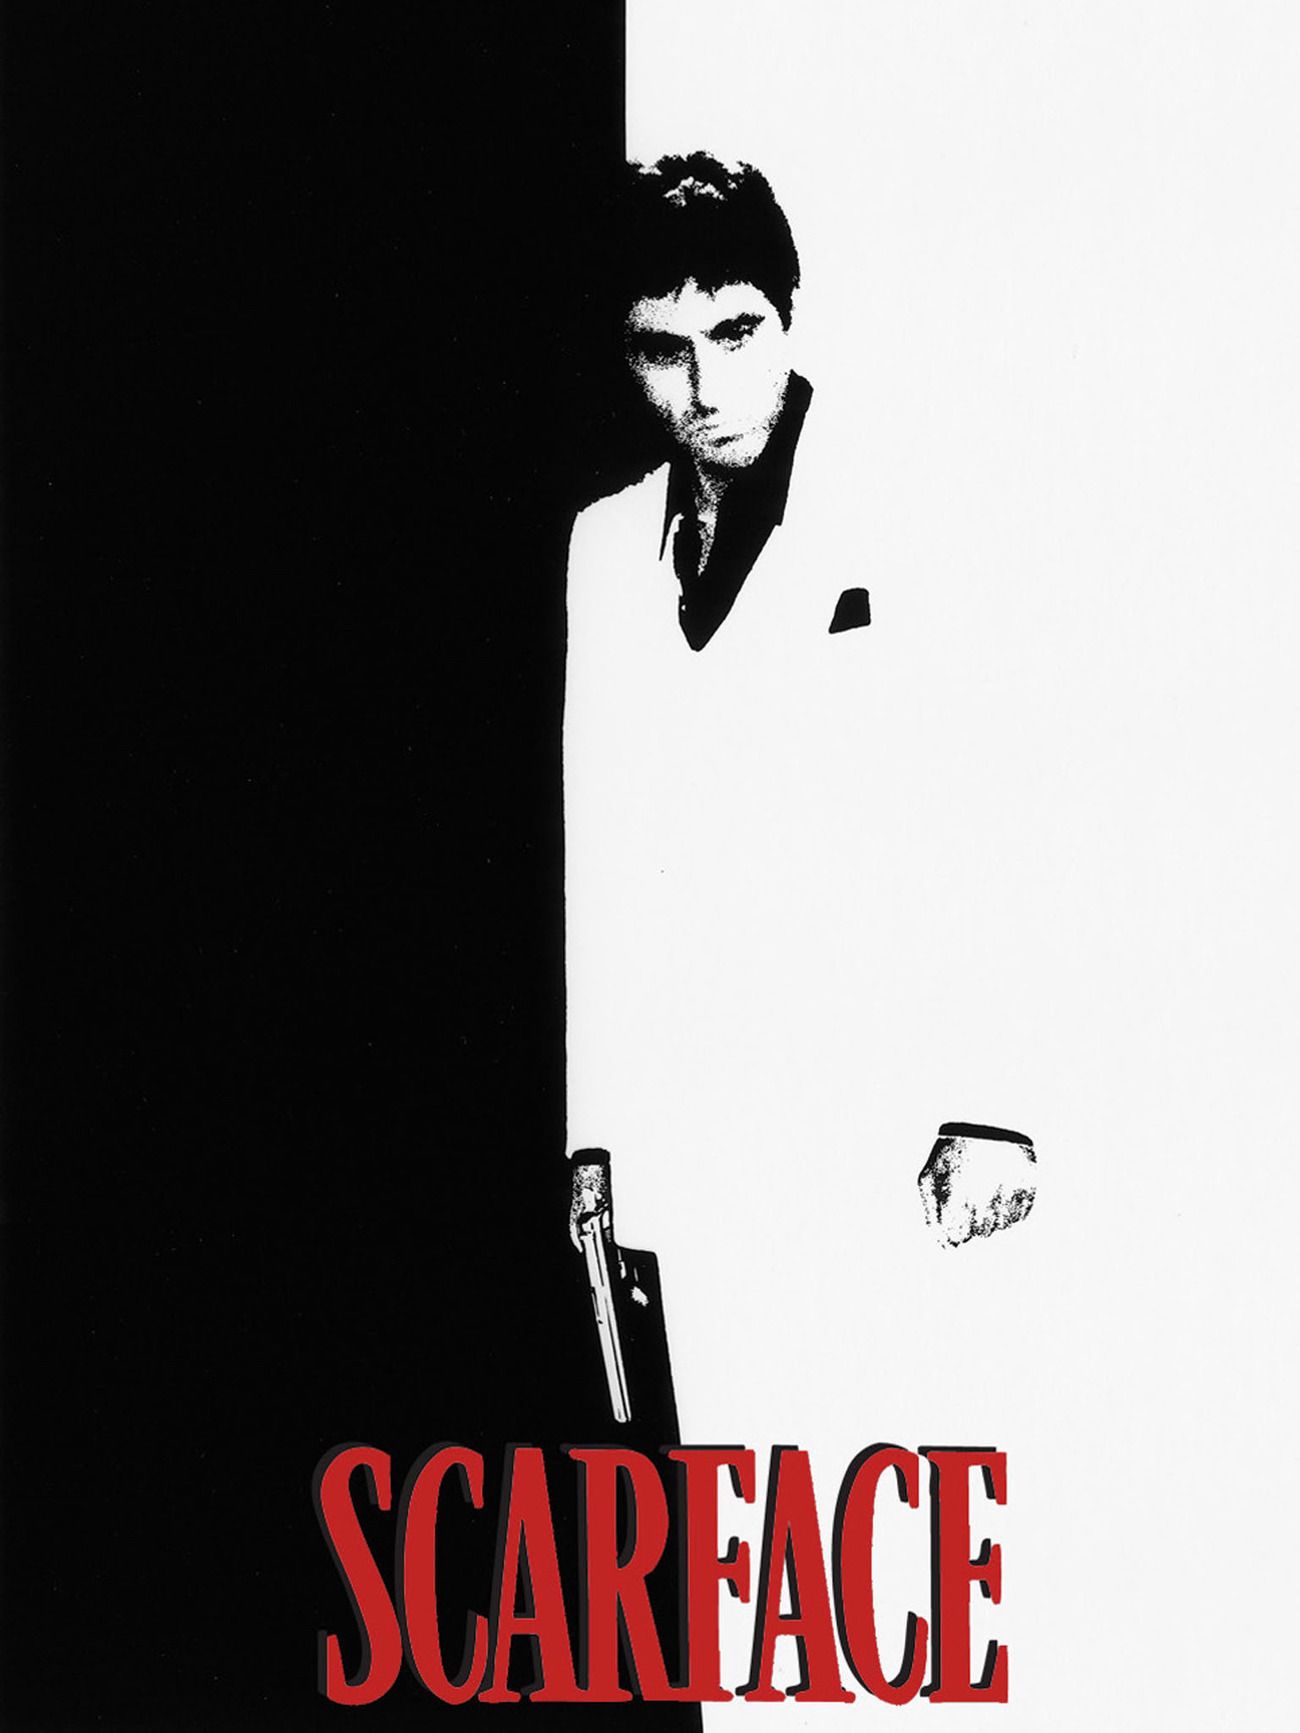 Scarface wallpaper, Movie, HQ Scarface pictureK Wallpaper 2019